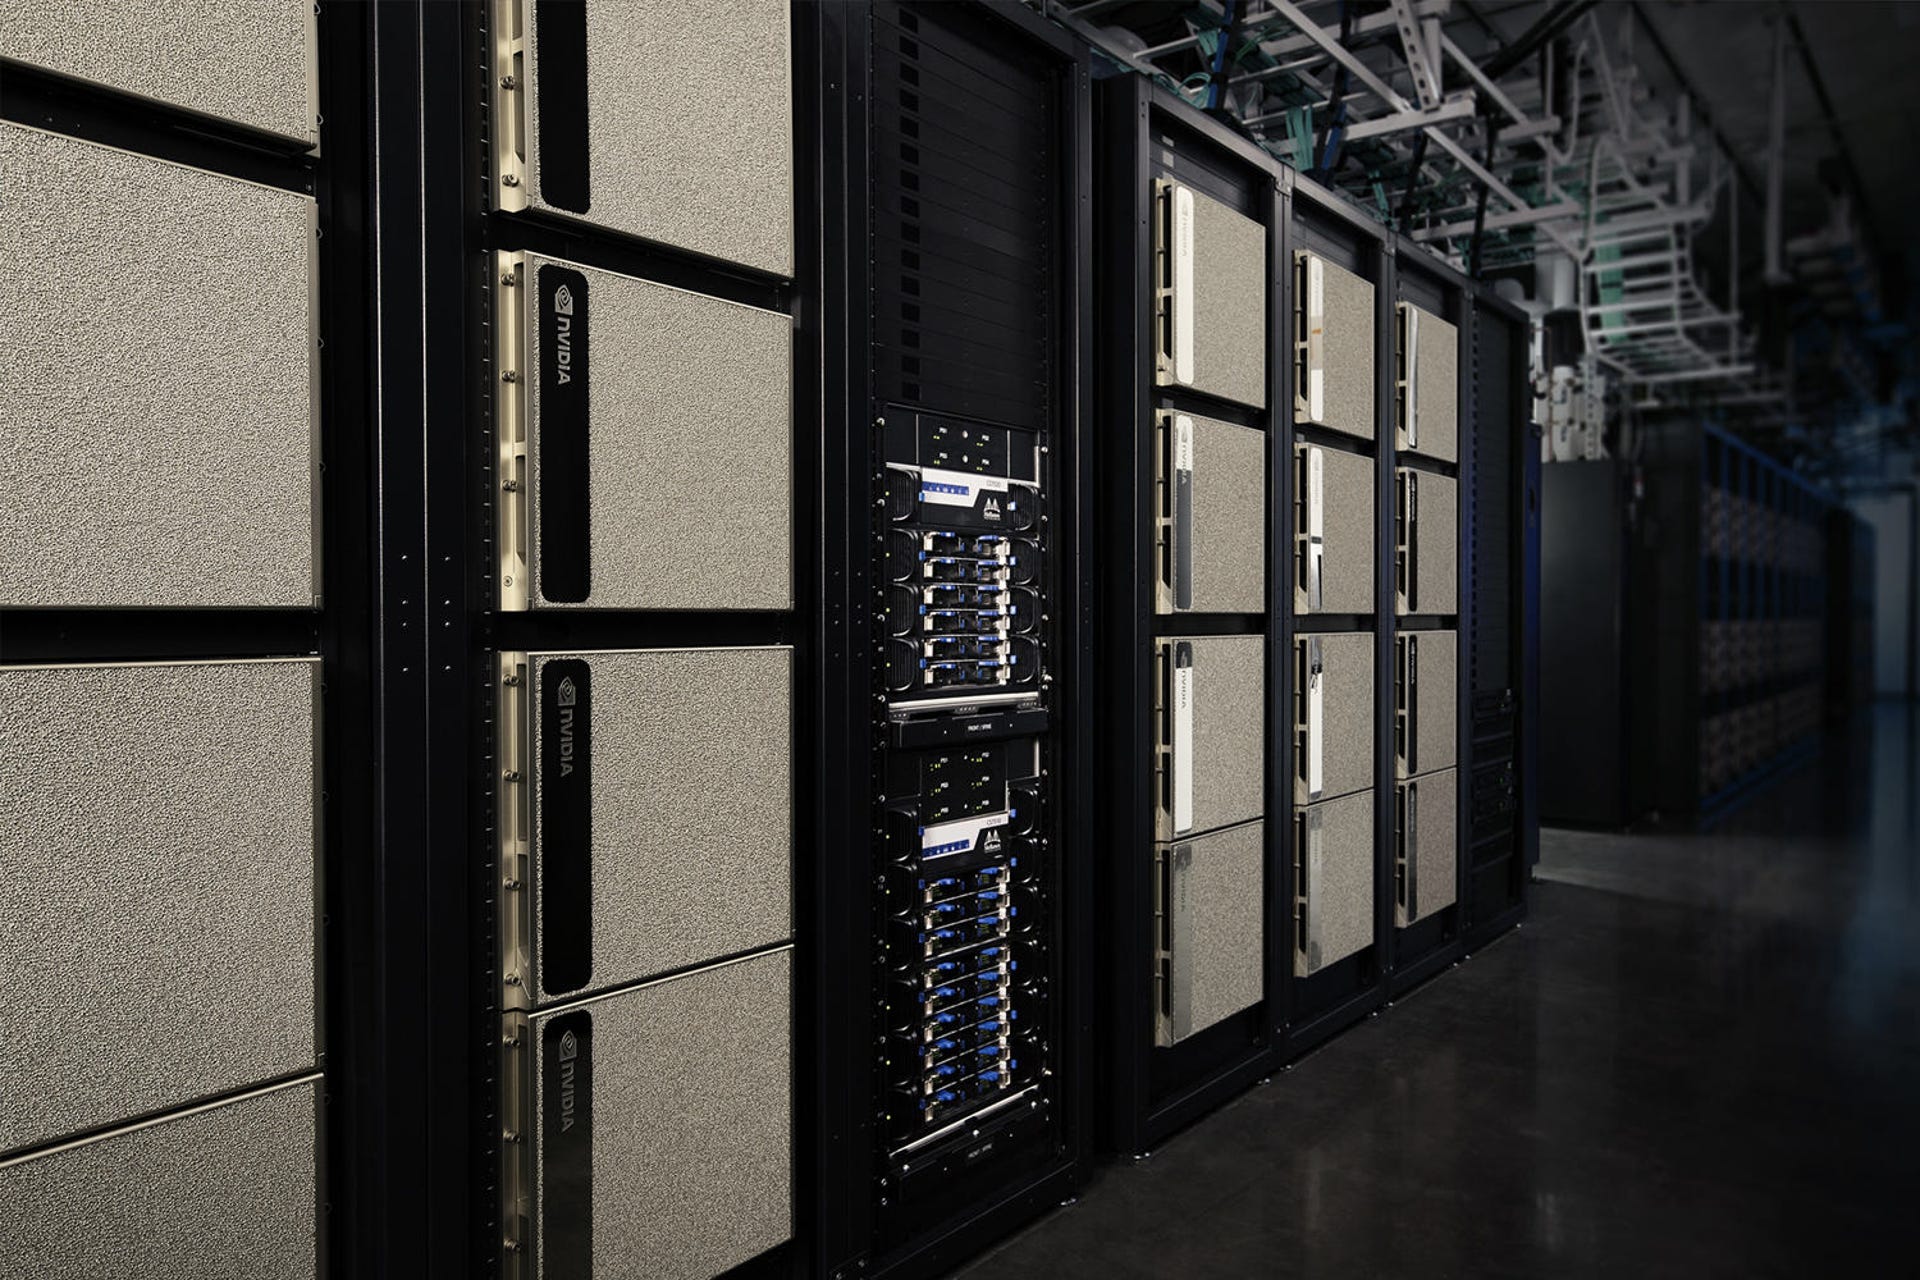 Nvidia's new 9.4-petaflop supercomputer aims to help train self-driving cars - CNET